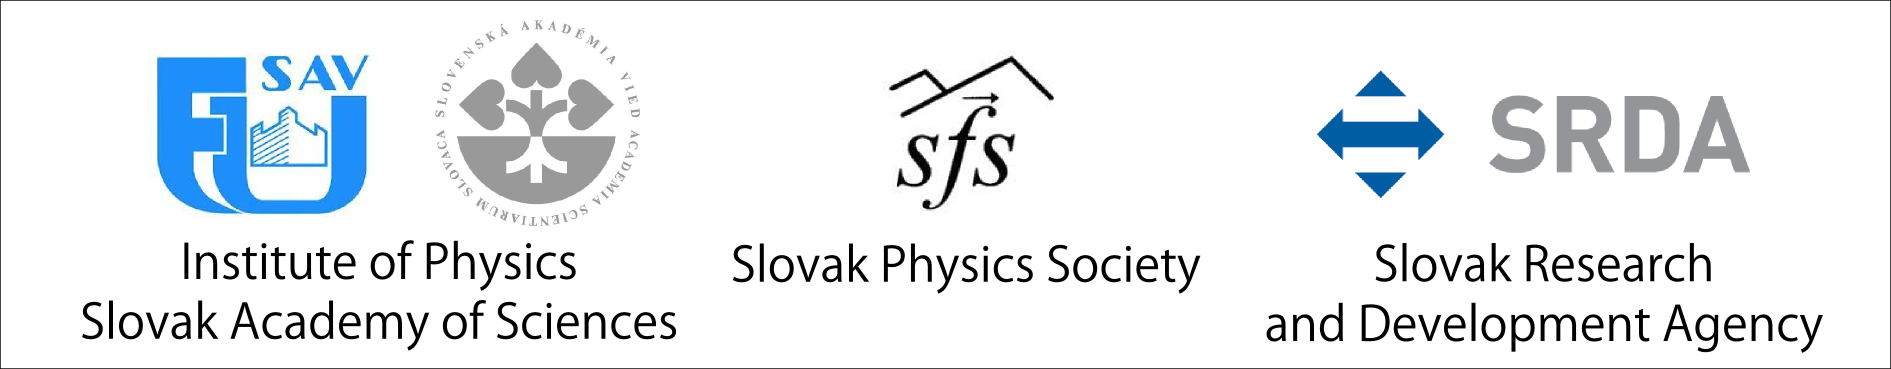 Institute of Physics SAS, Slovak Physics Society, Slovak Research and Development Agency